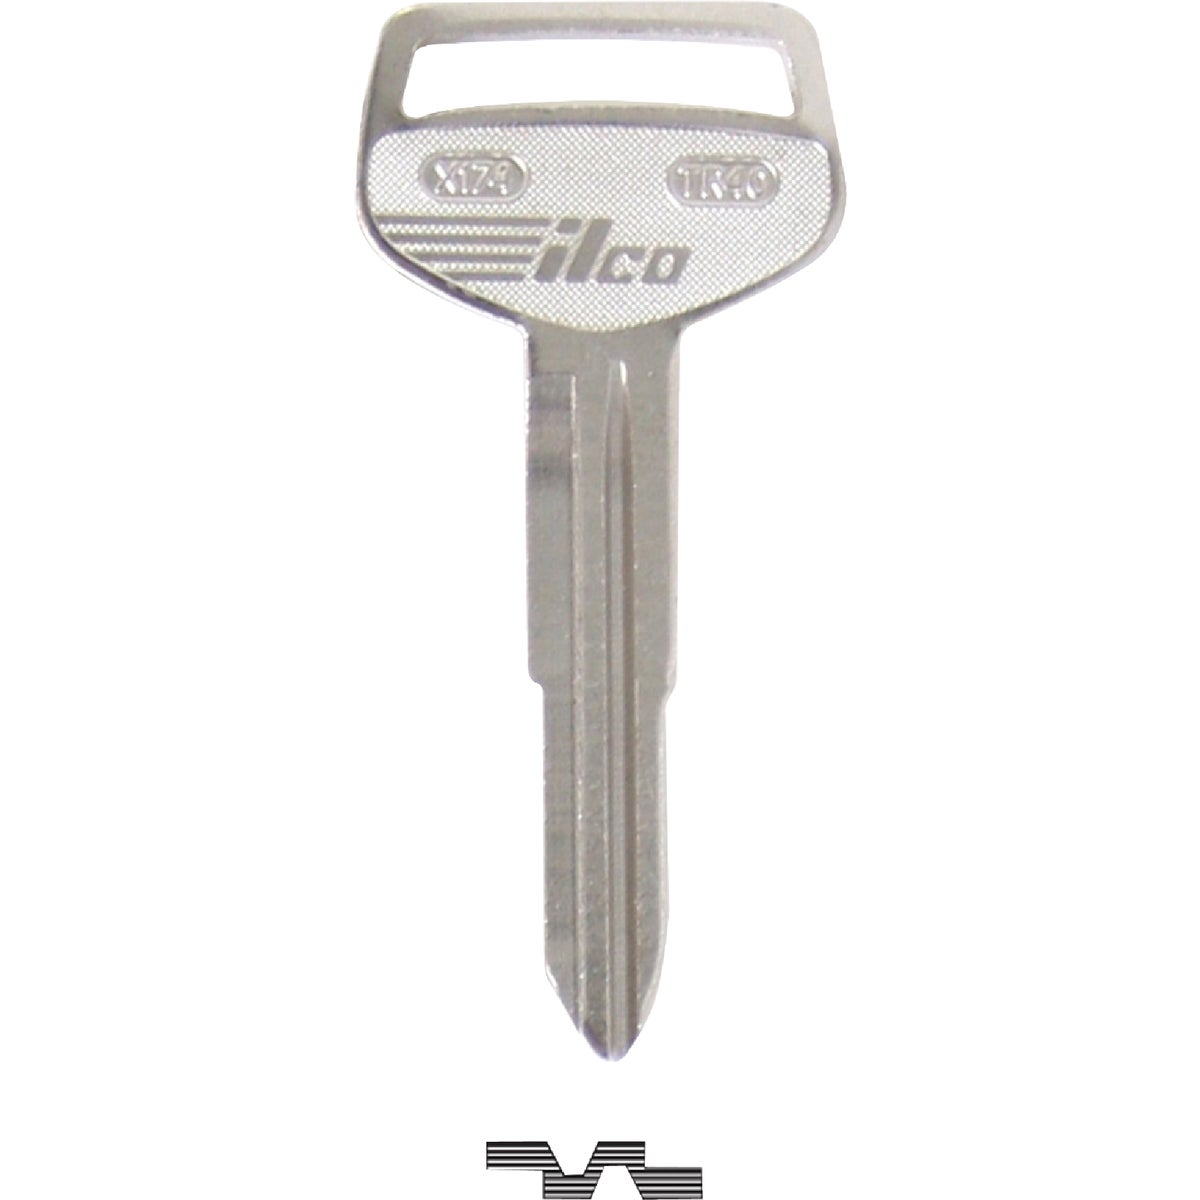 ILCO Toyota Nickel Plated Automotive Key, TR40 / X174 (10-Pack)